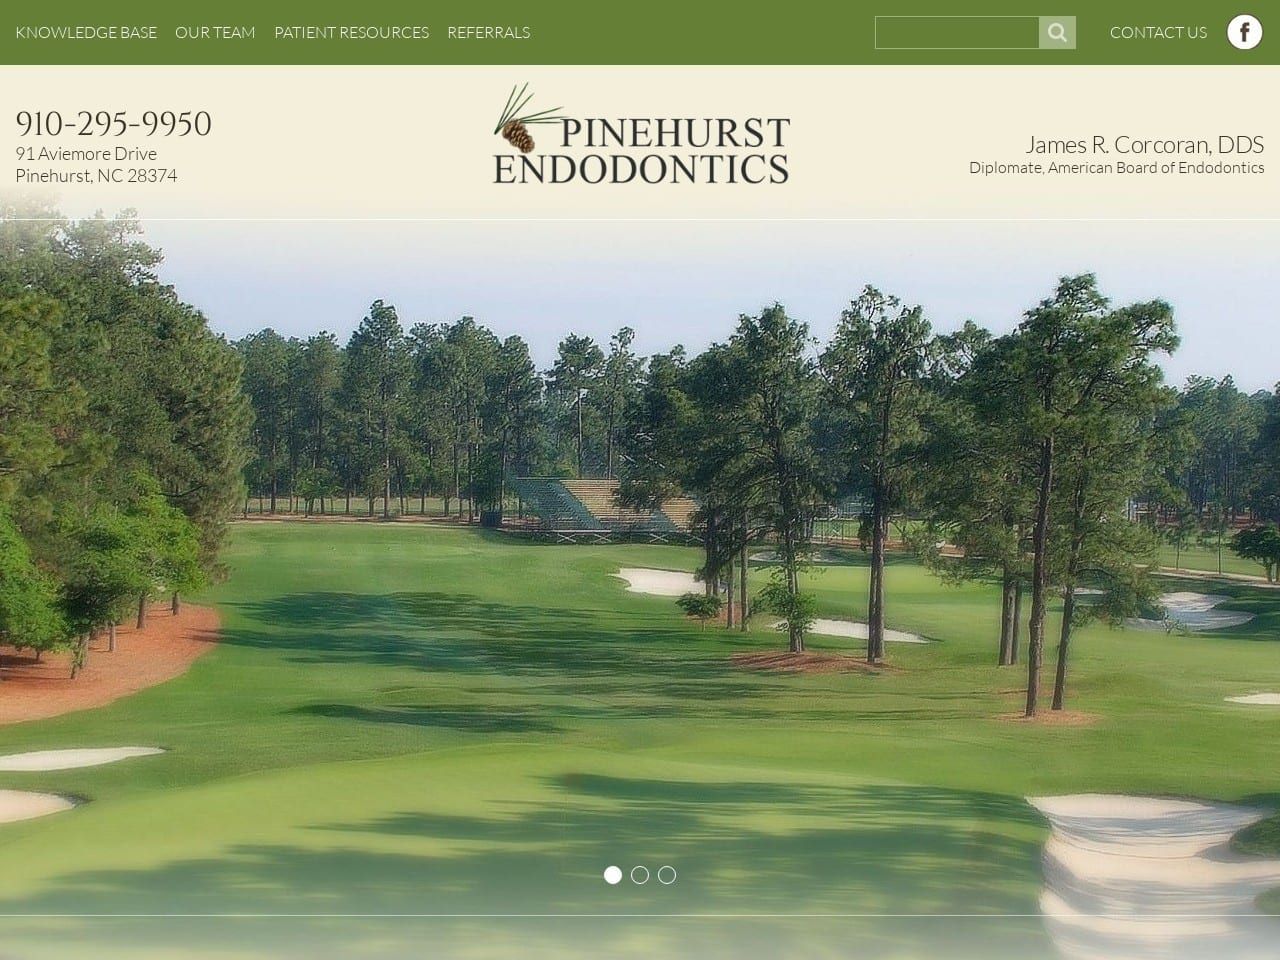 Pinehurst Endodontics Website Screenshot from pinehurstendo.com